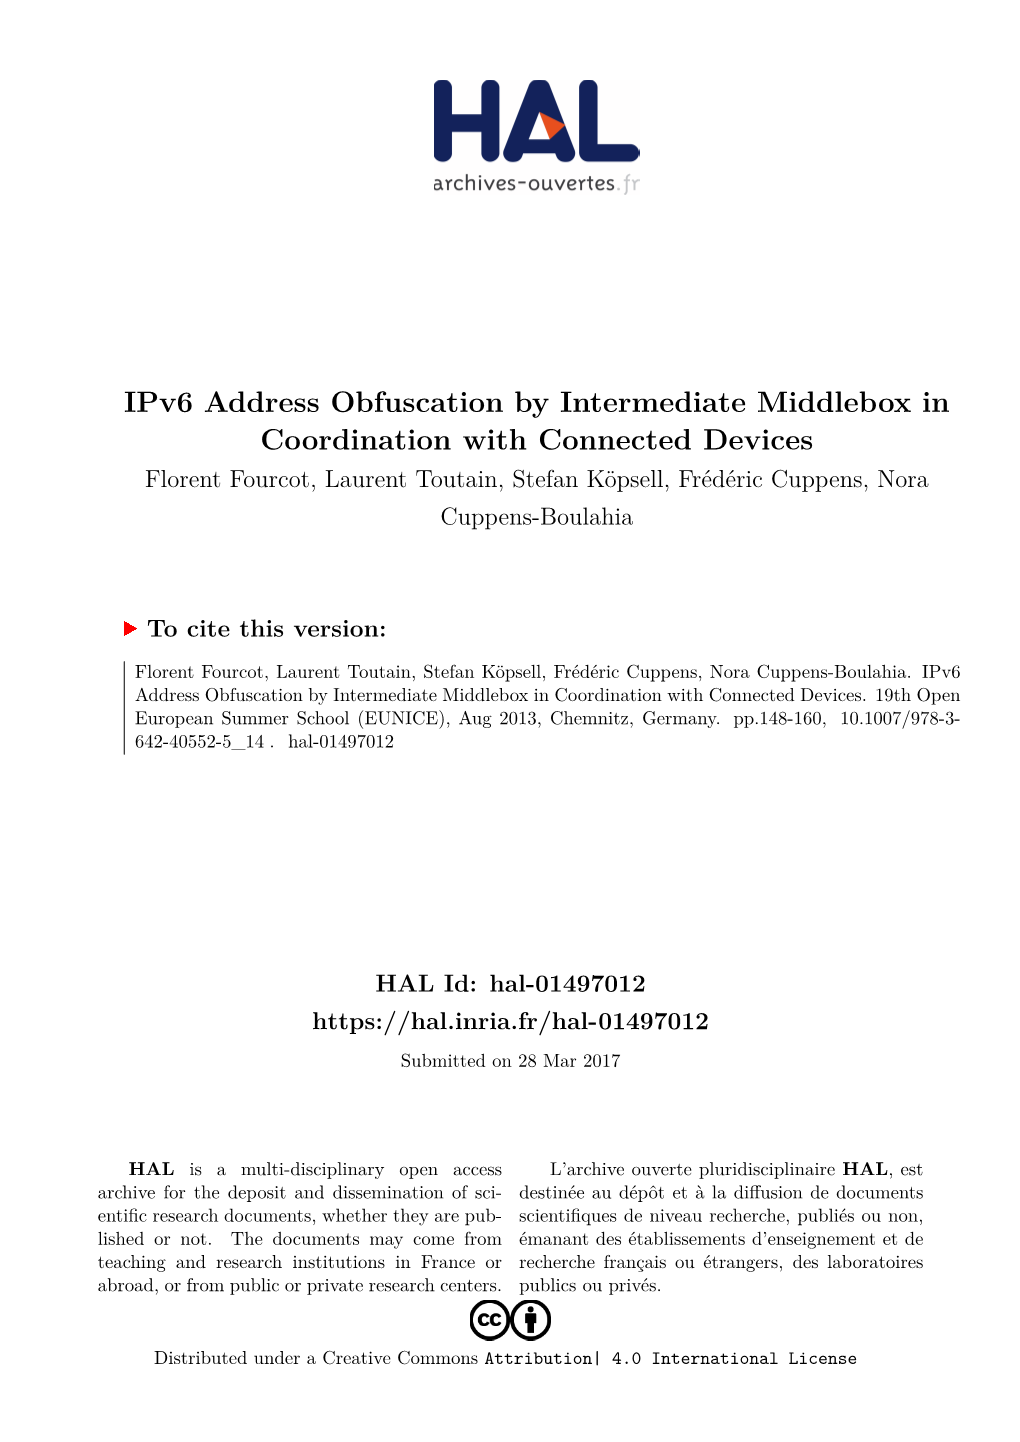 Ipv6 Address Obfuscation by Intermediate Middlebox